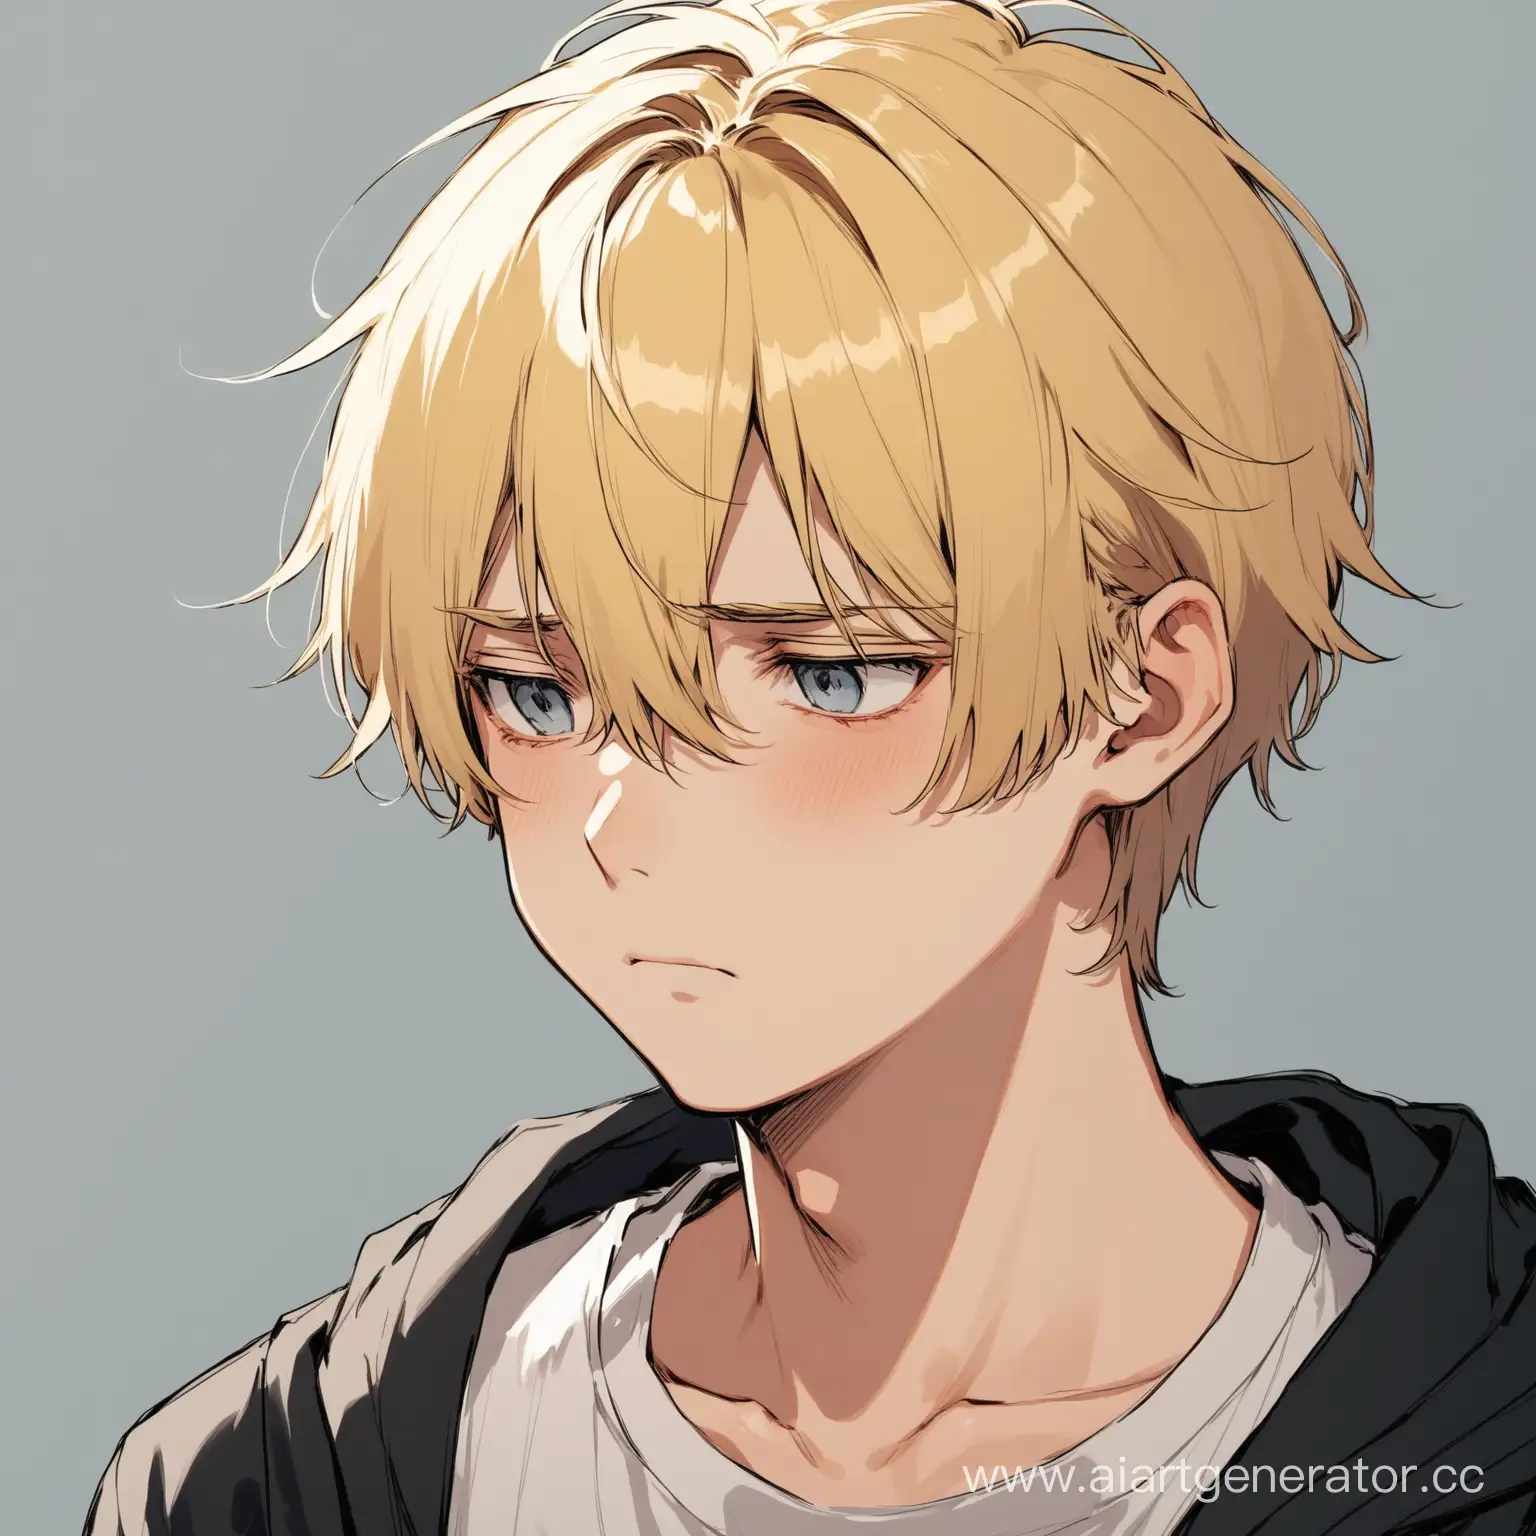 sad boy, blond

